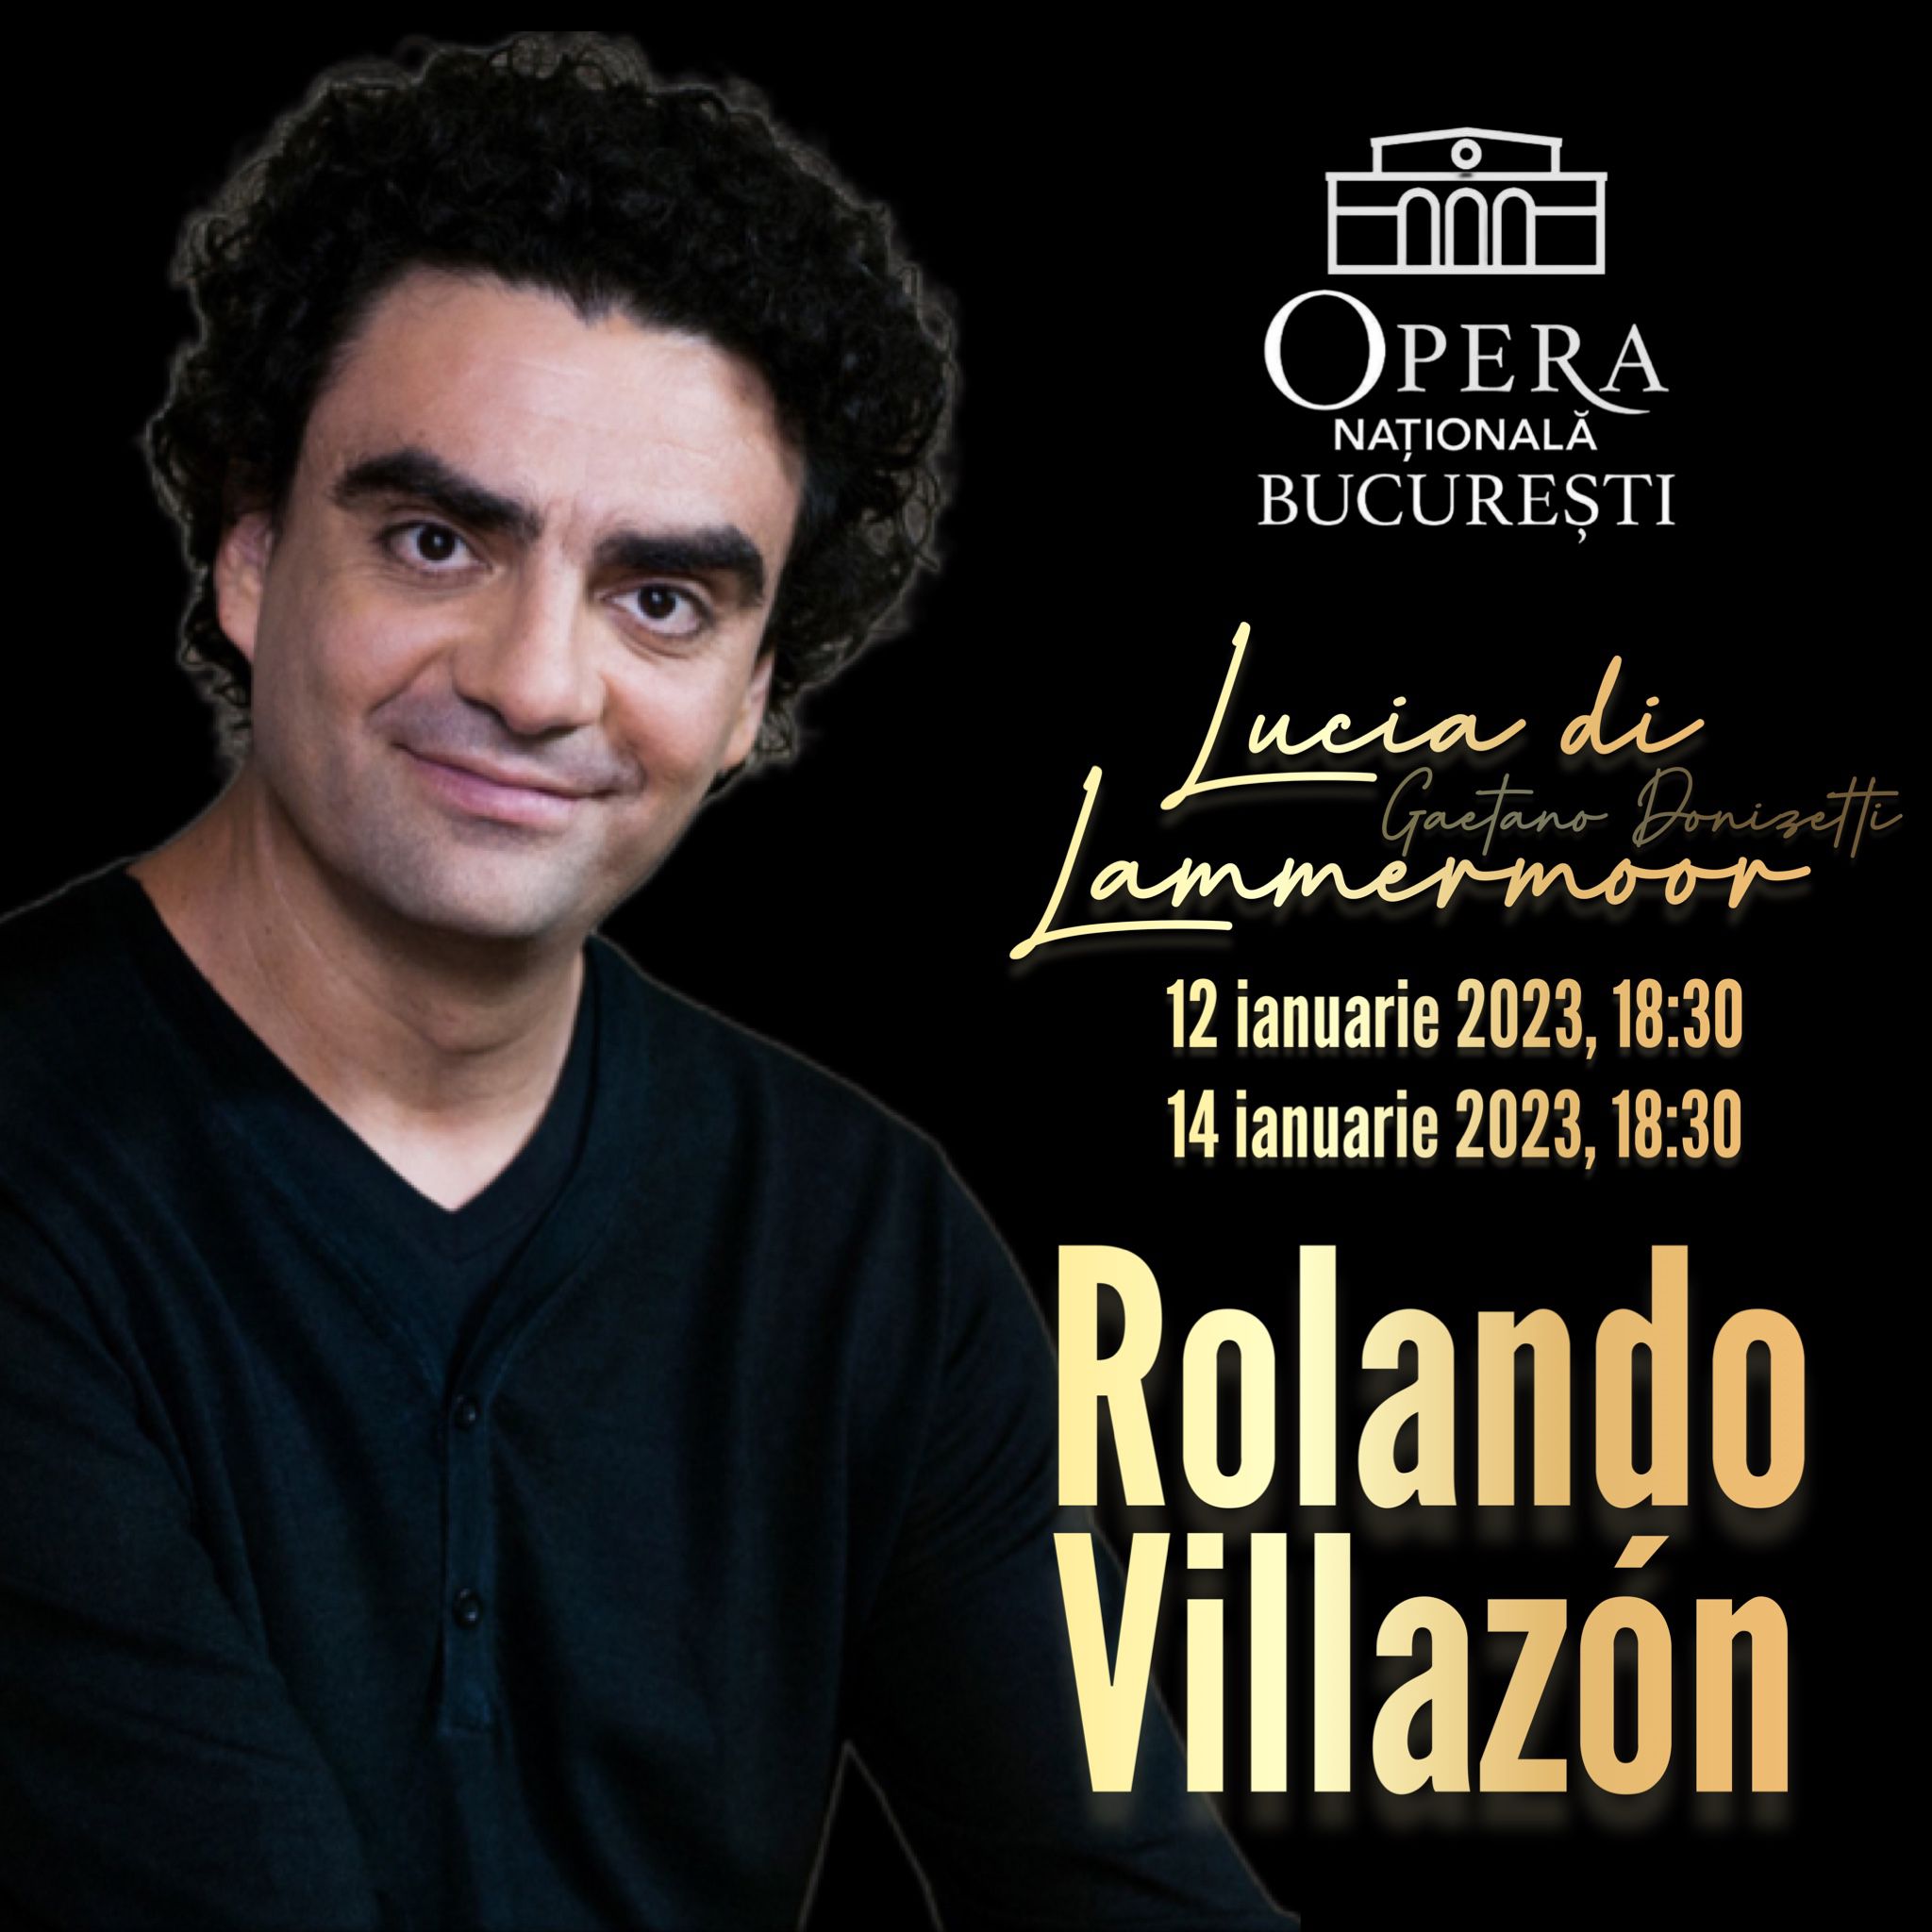 Rolando Villazón, prima data in Romania pe scena Operei Nationale Bucuresti